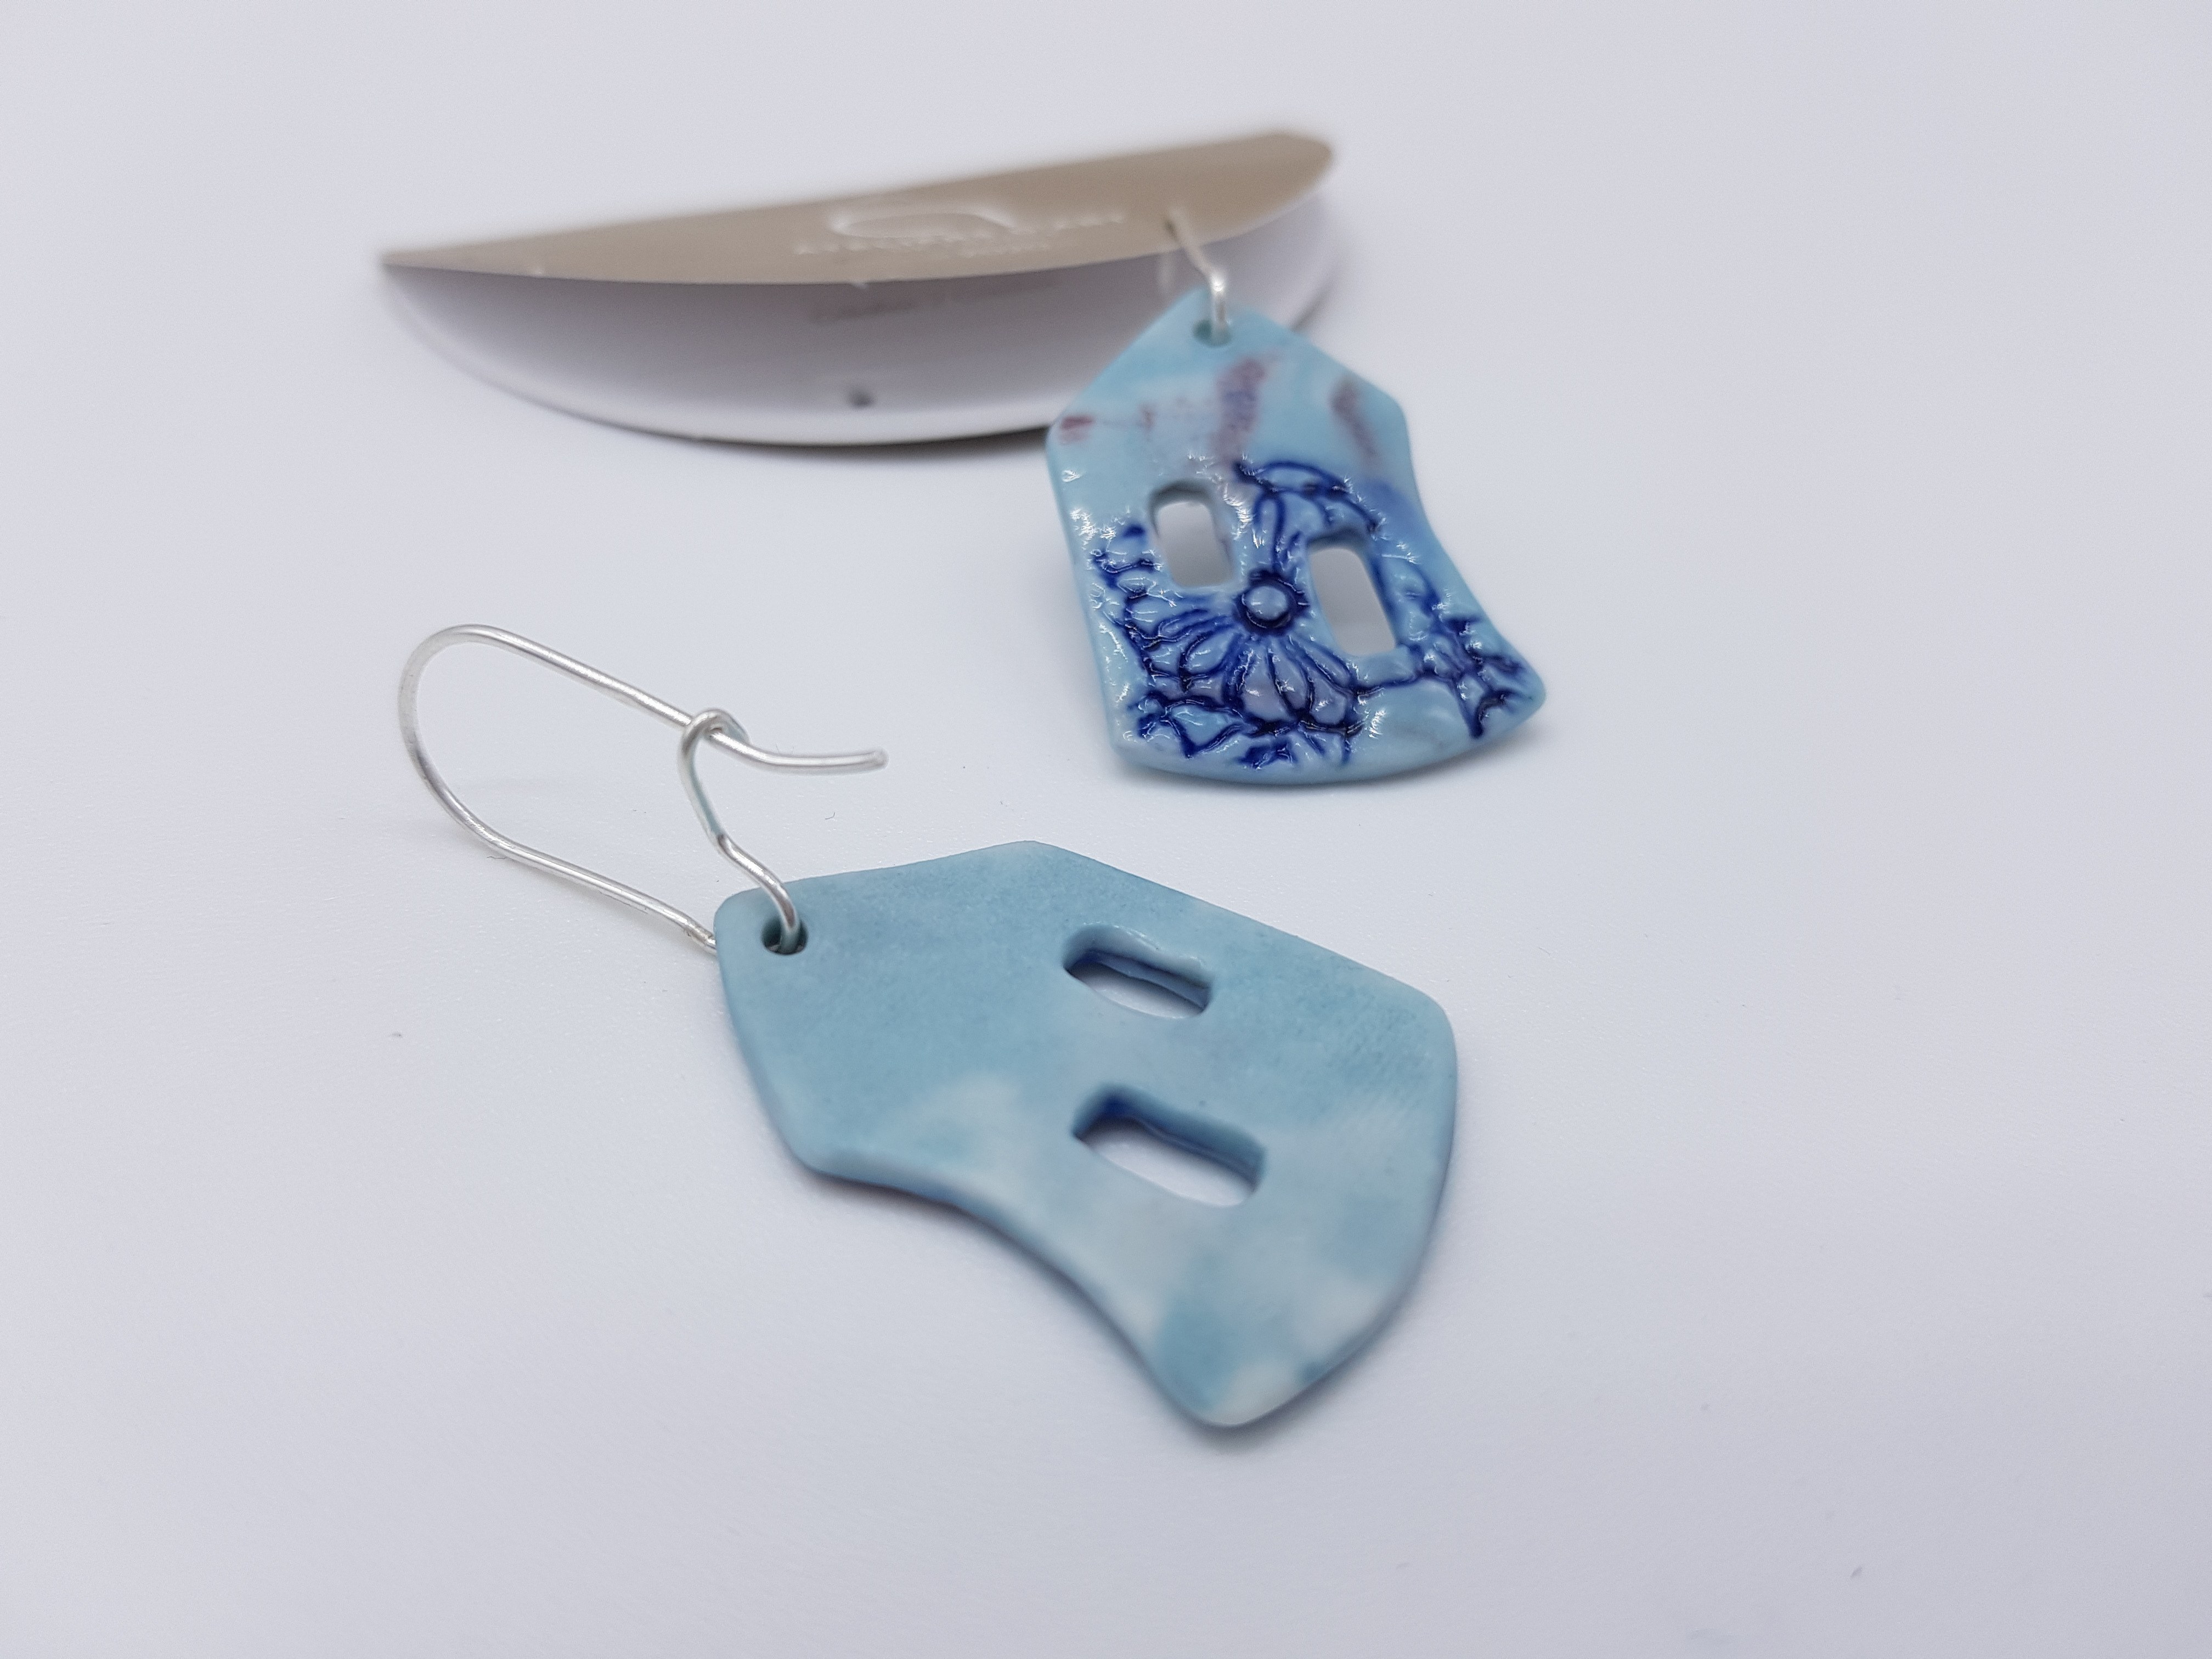 Boucles d'oreilles Maison - Collection Burano - Coloris Bleu clair